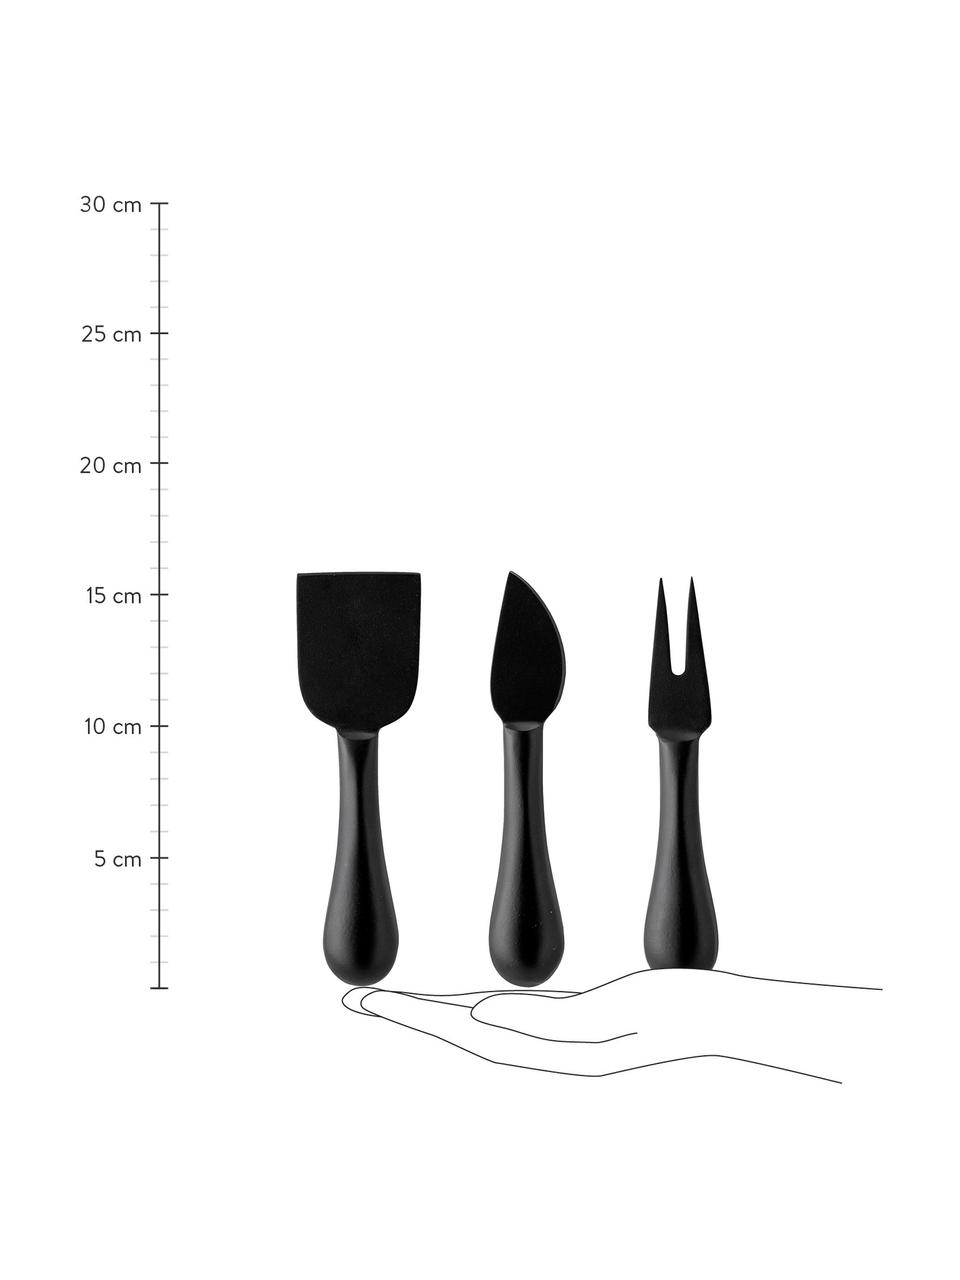 Set de cuchillos para quesos Evalda, 3 pzas., Cuchillo: acero inoxidable 14/1, pi, Bolsa: lona, Negro, Set de diferentes tamaños